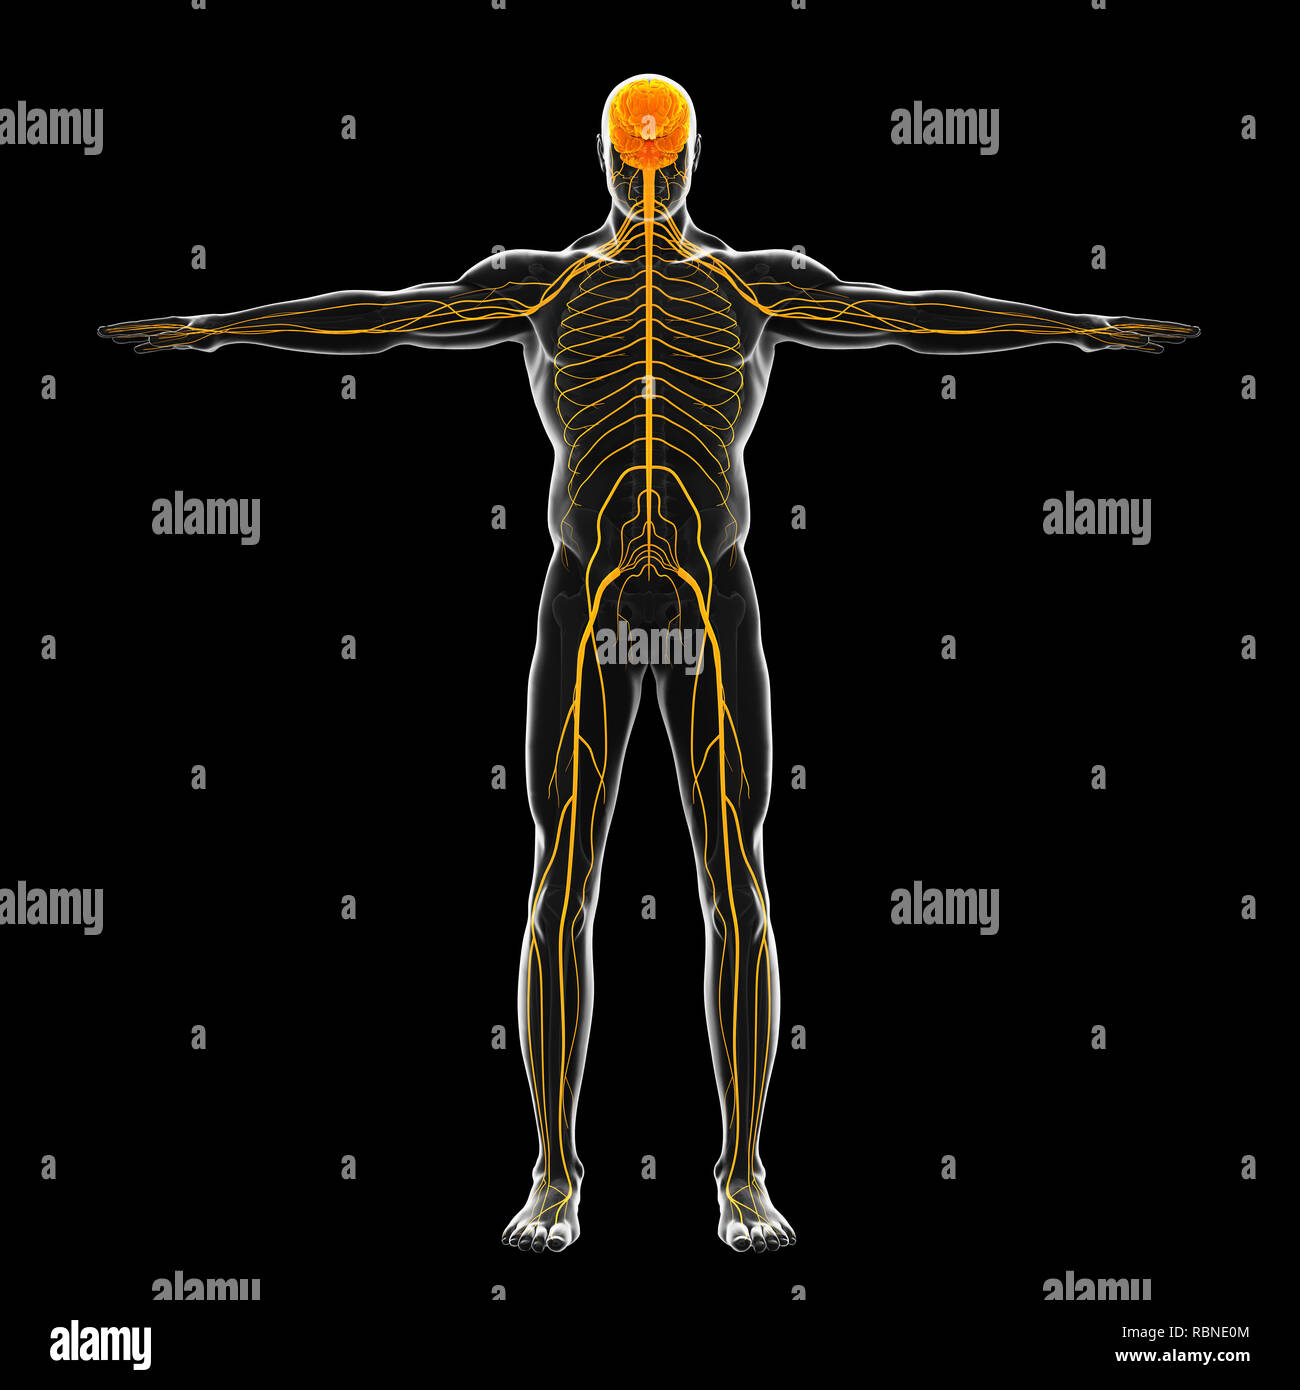 Human Nervous System Illustration Stock Photo